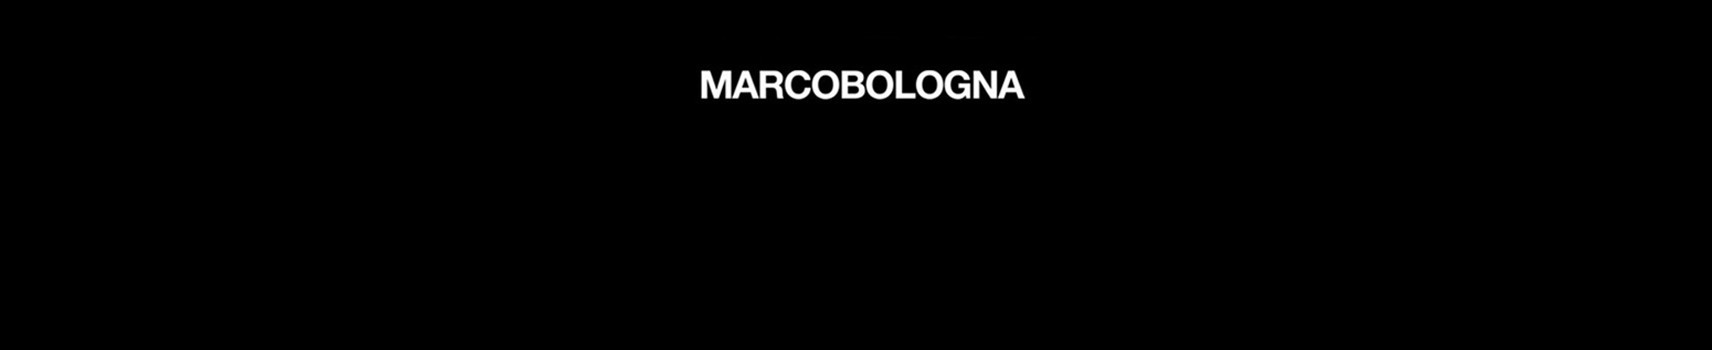 Marco Bologna